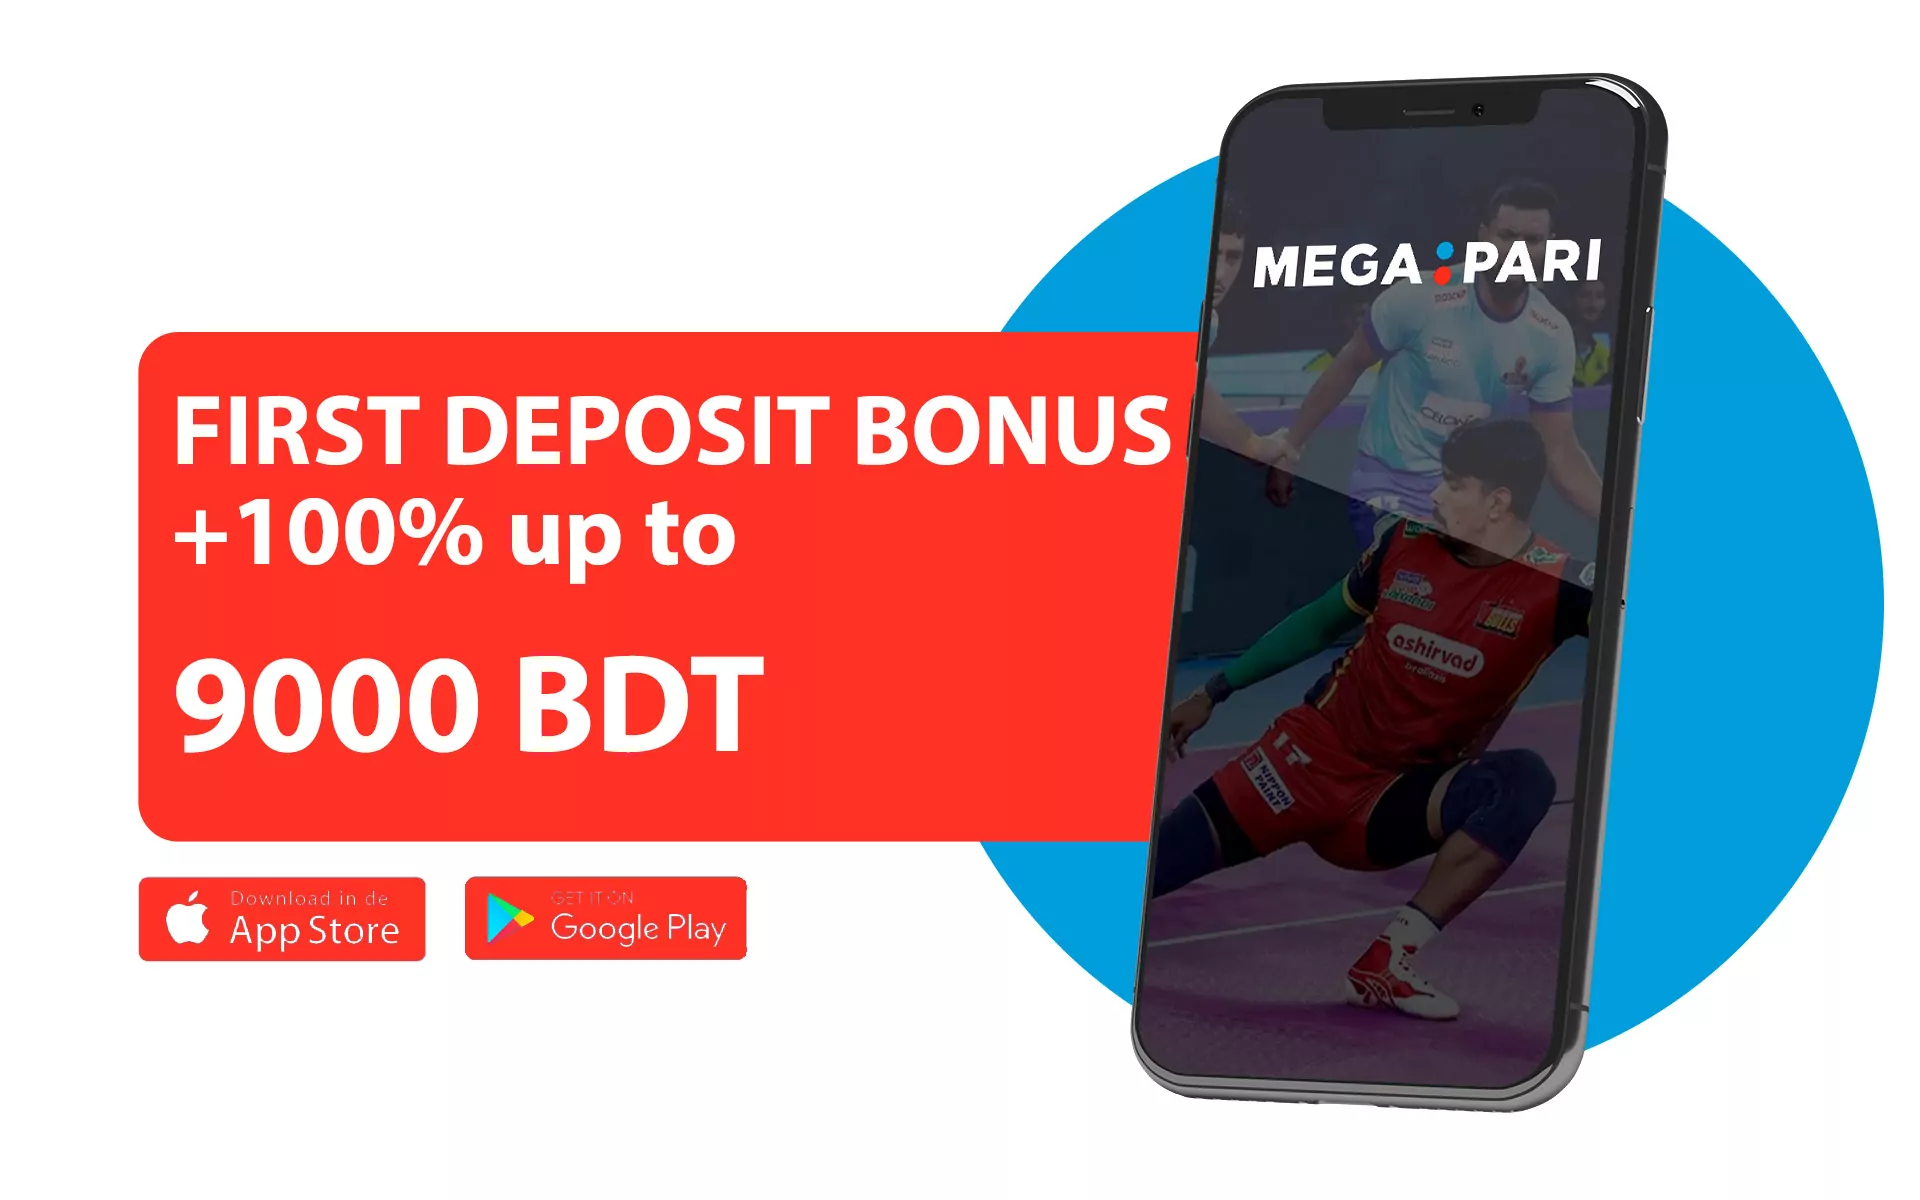 Megapari gives 100% welcome bonus on first deposit to bet on kabaddi.